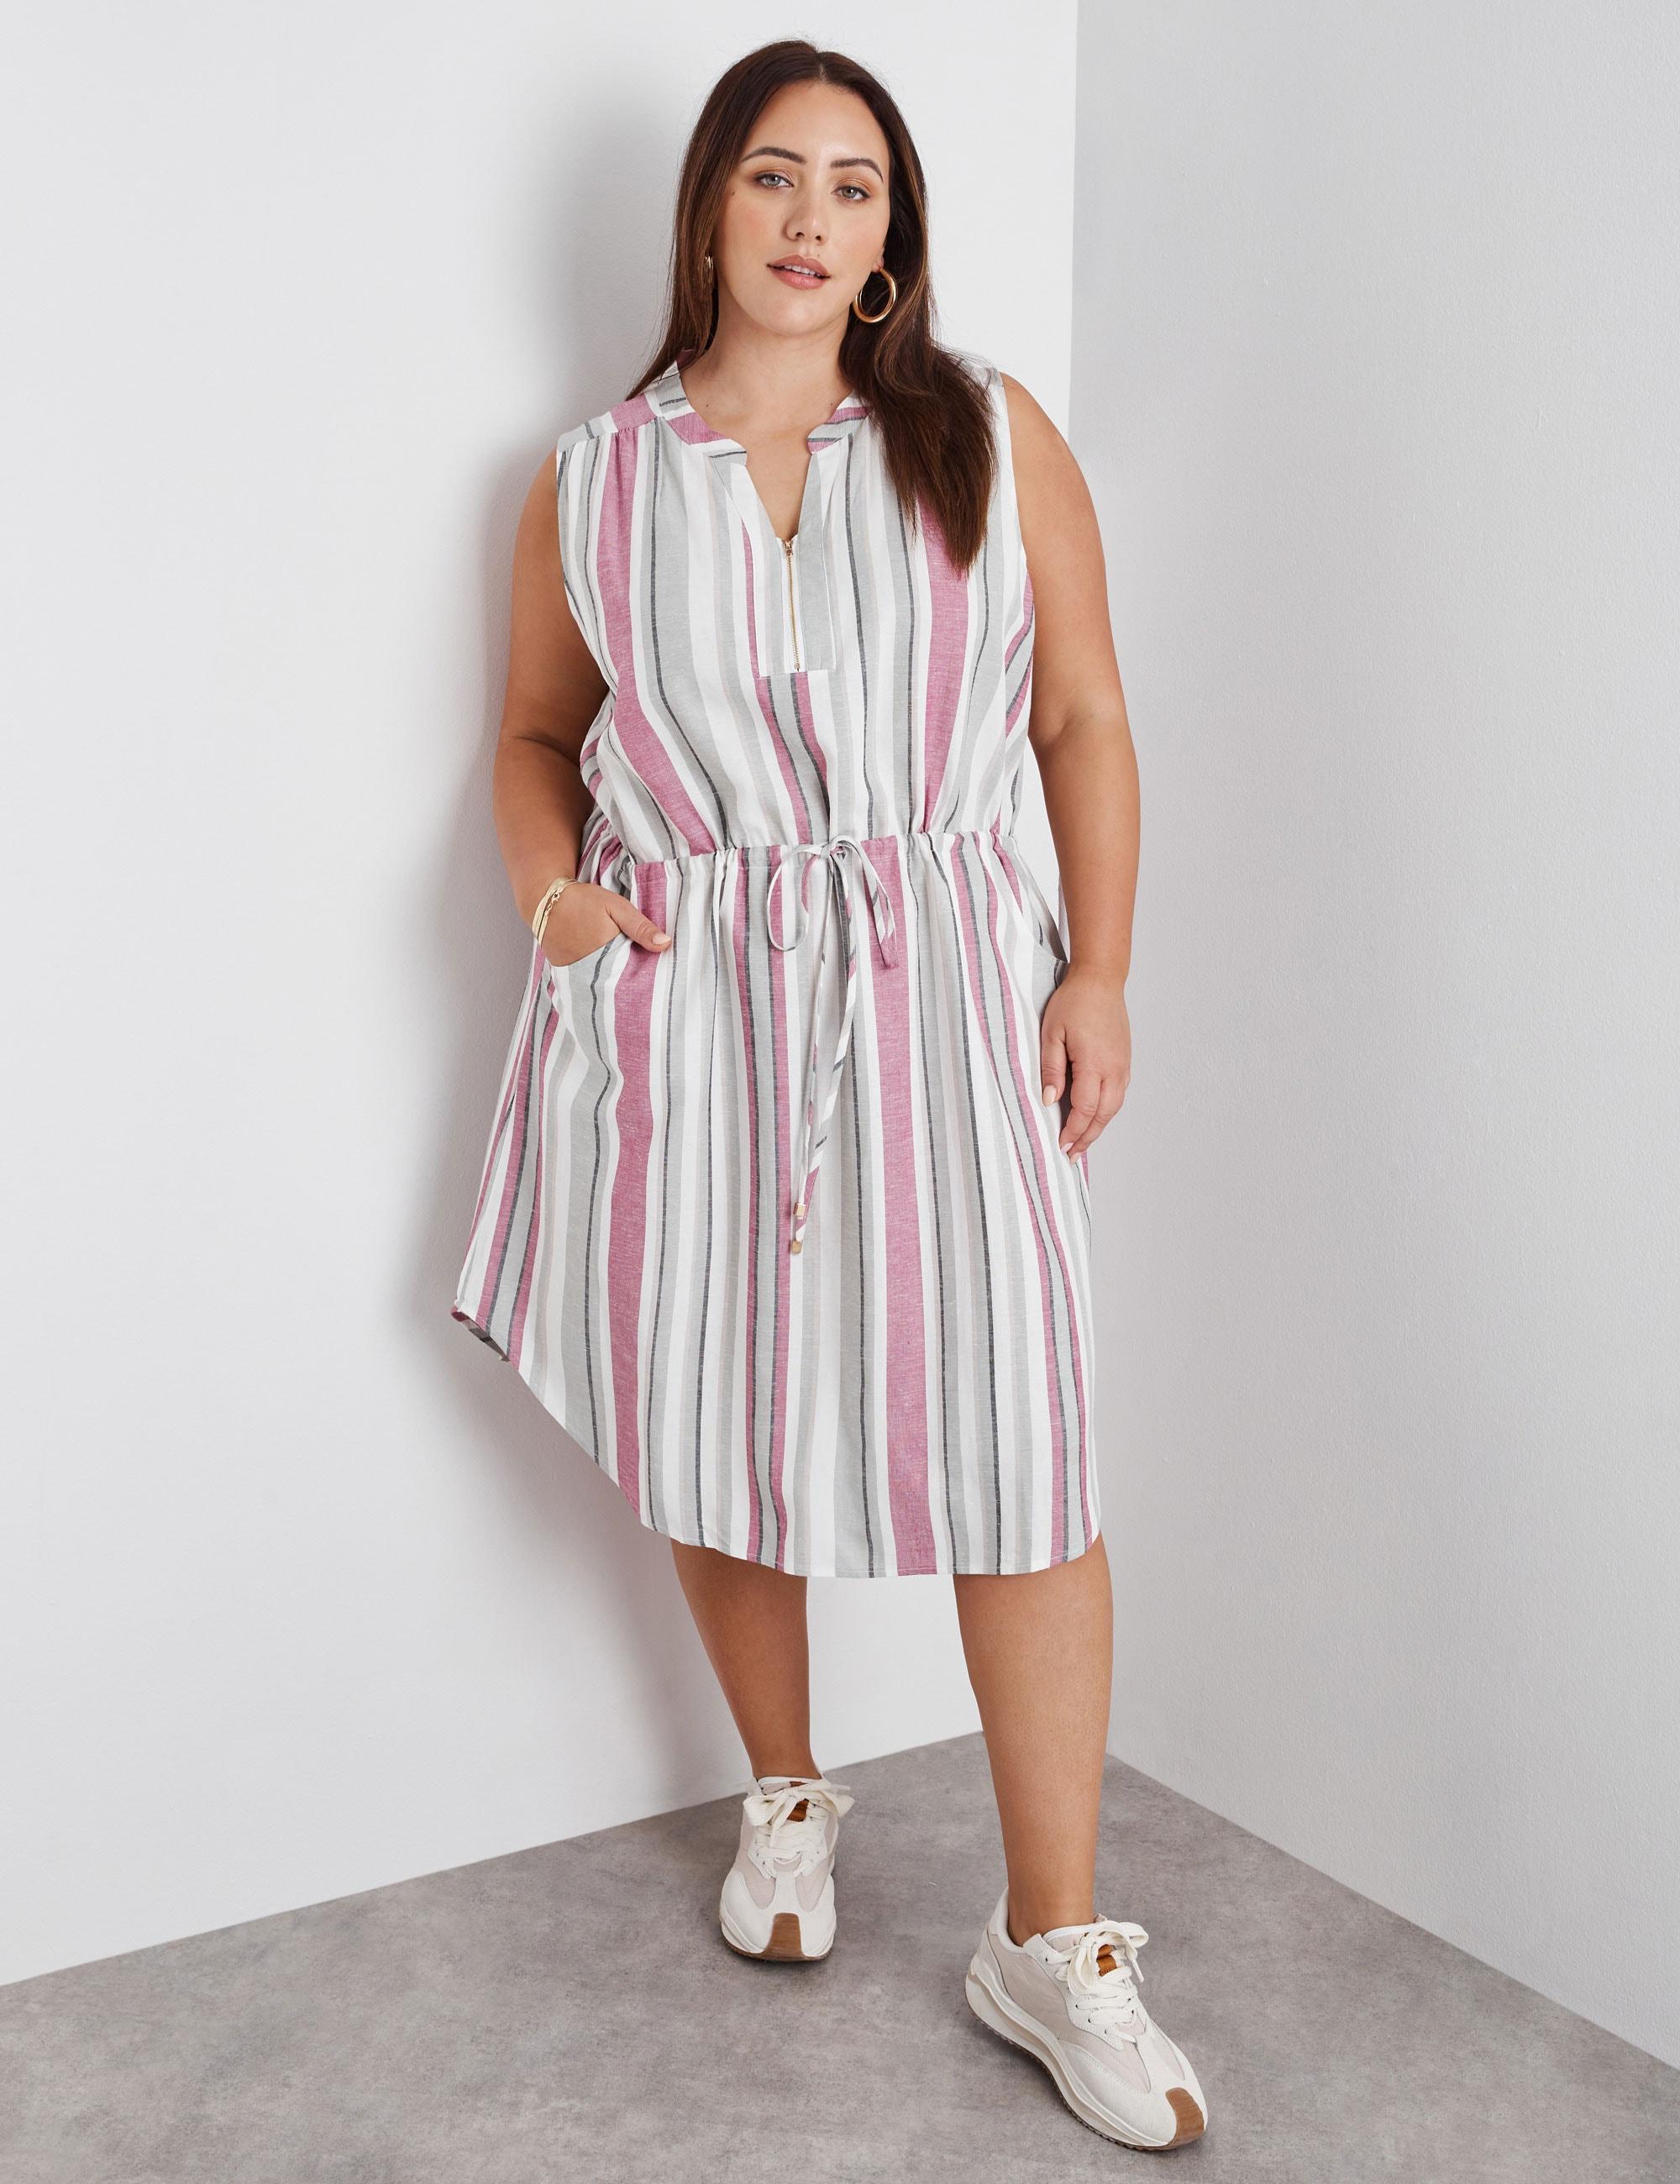 BeMe - Plus Size - Womens Midi Dress - Pink - Summer Linen A Line Dresses - Sleeveless - Stripes - Zipped Detail Double Pocket - Women's Clothing